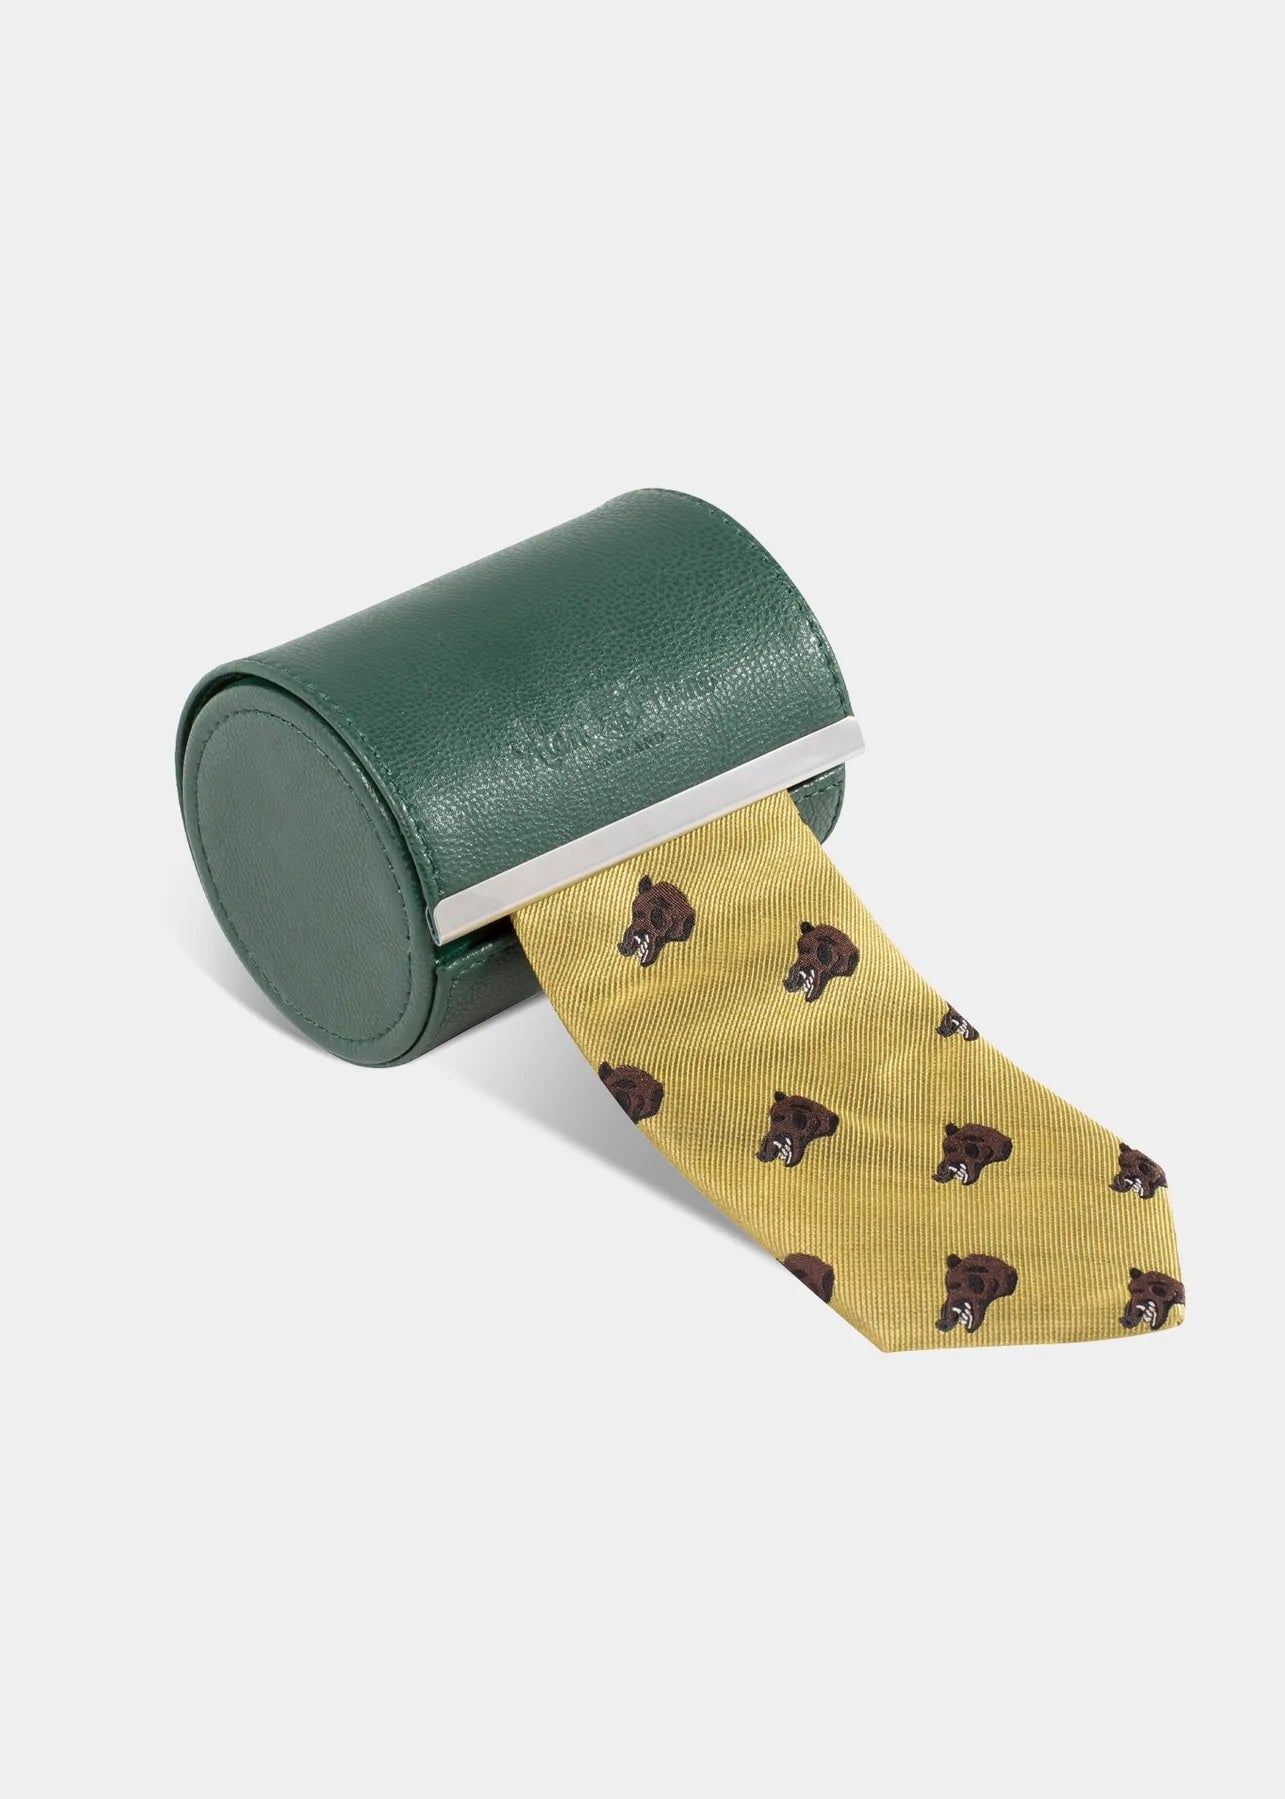 Ripon Silk Country Tie for Men with Wild Boar Design